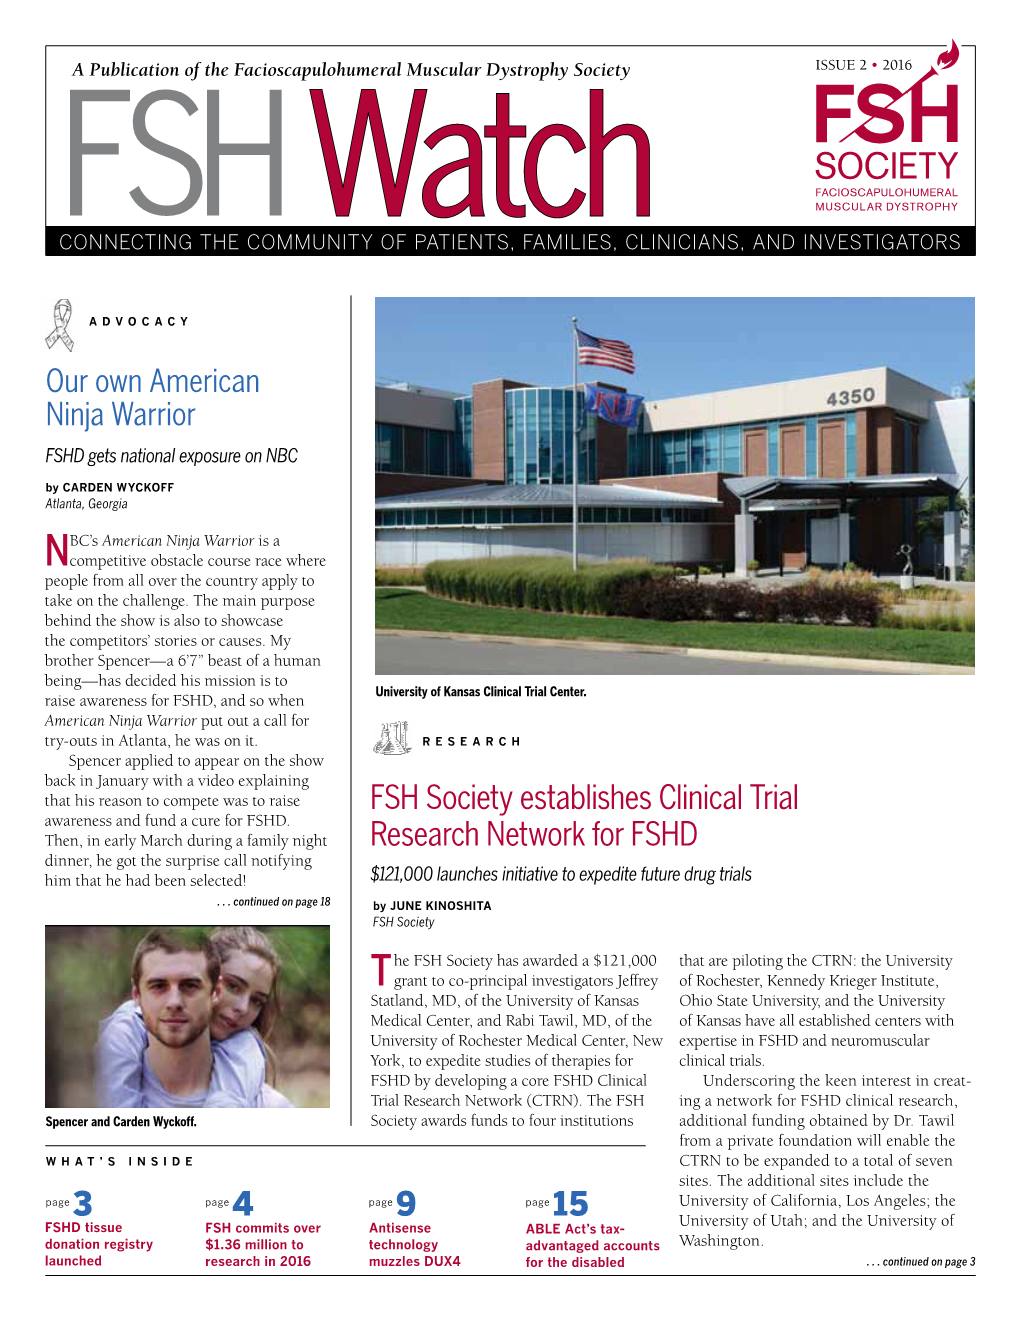 3 4 FSH Society Establishes Clinical Trial Research Network for FSHD